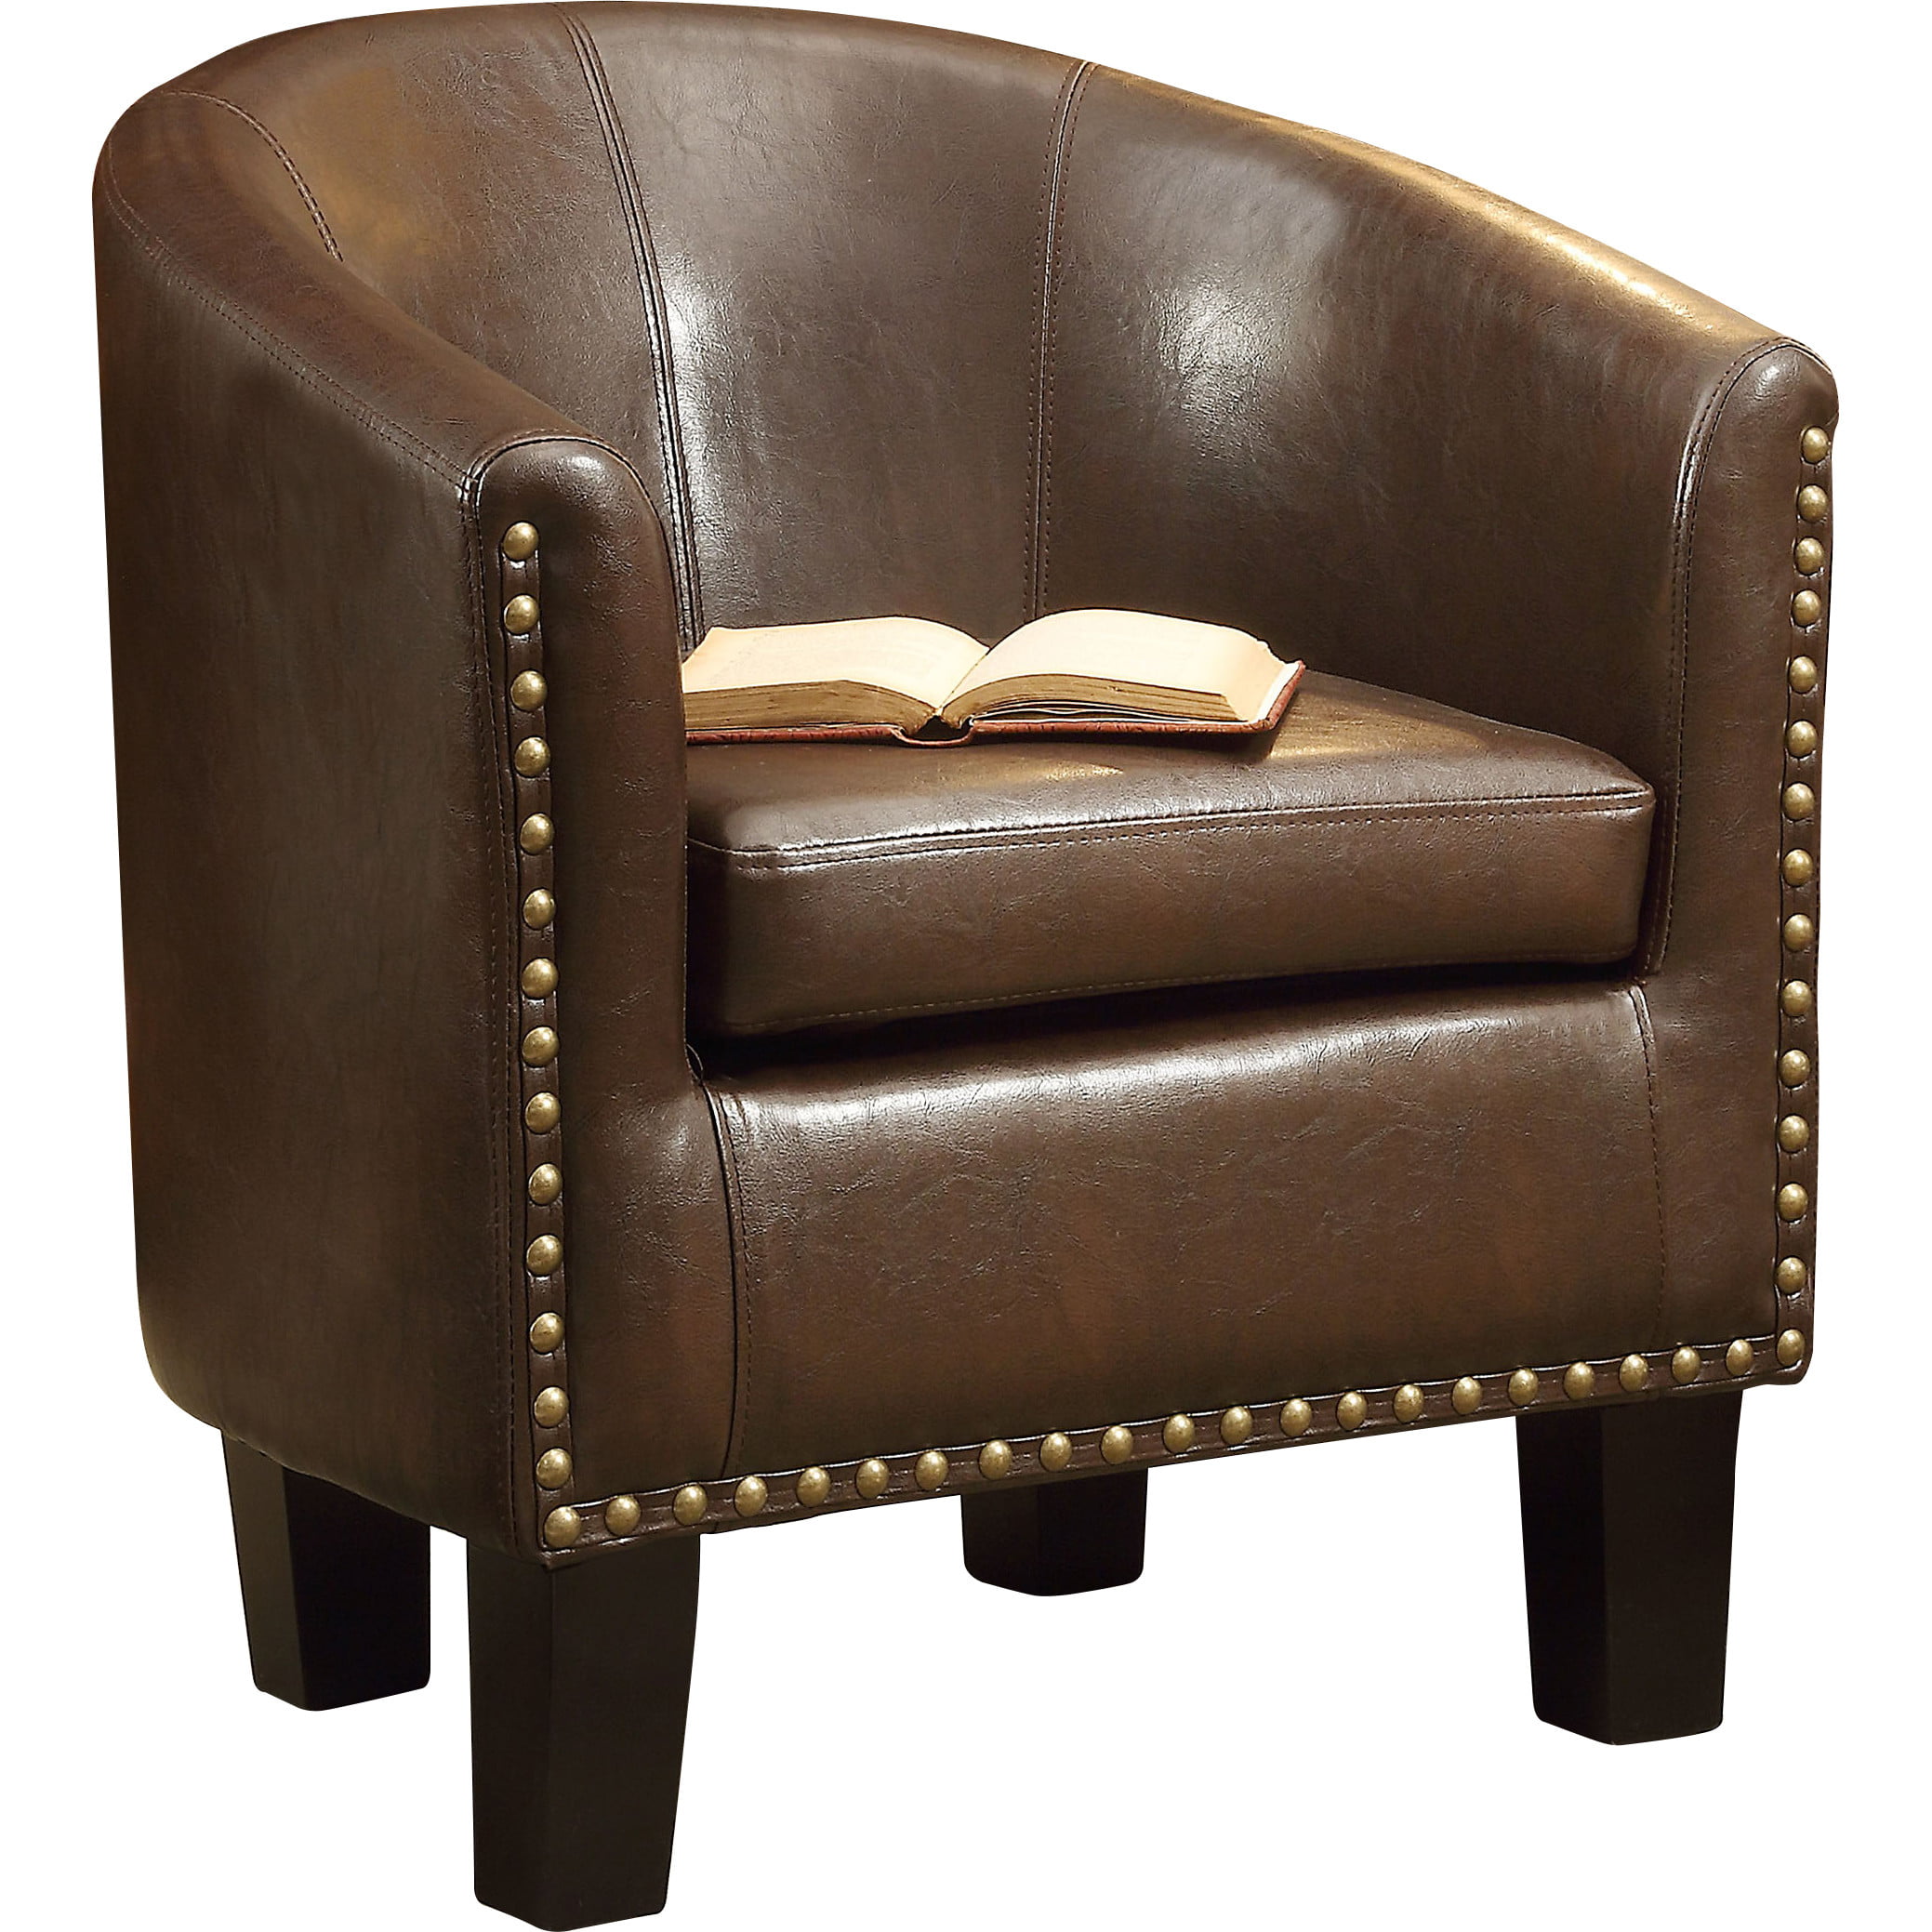 Alton Furniture Gemma Arm Club Chair, Brown Leather Barrel Chair